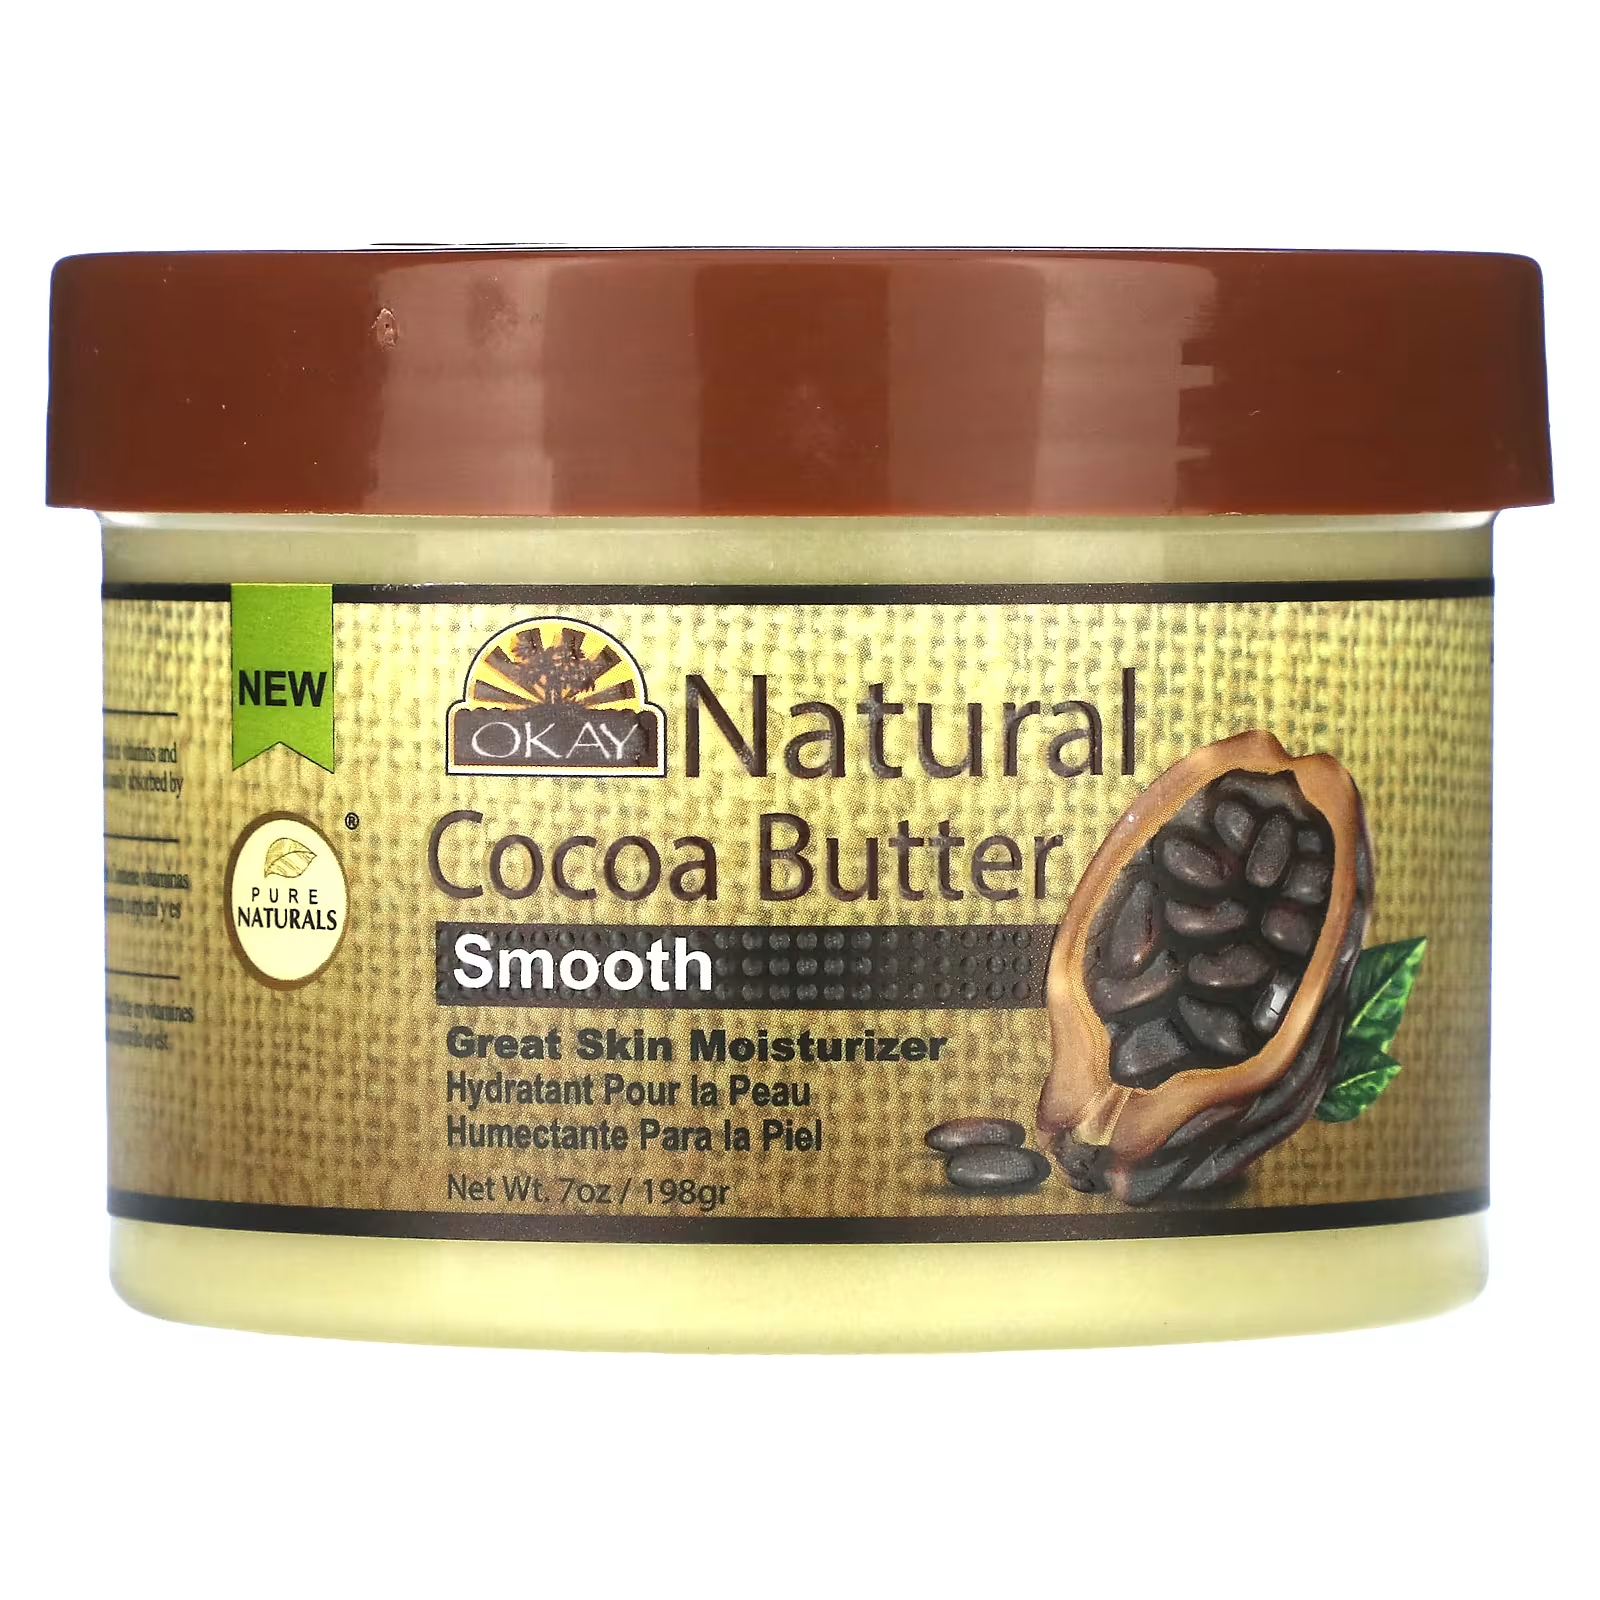 Масло какао Okay Pure Naturals, 198 г кокосовое масло okay pure naturals для тела 198 г